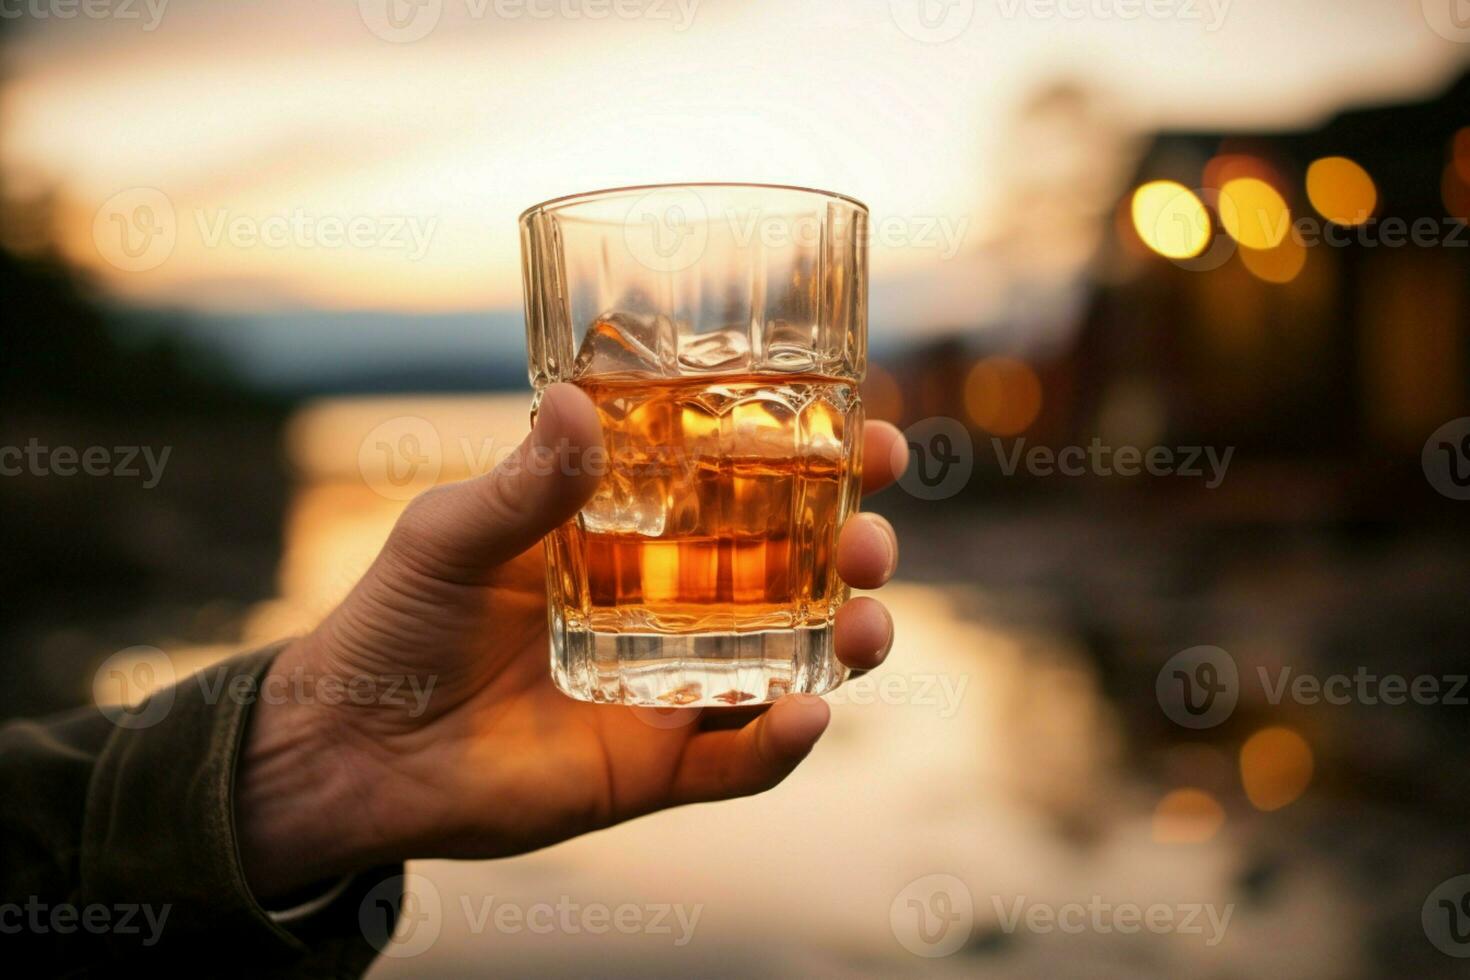 intrigerend detailopname mannetje hand- stevig houdt een glas van glad whisky ai gegenereerd foto